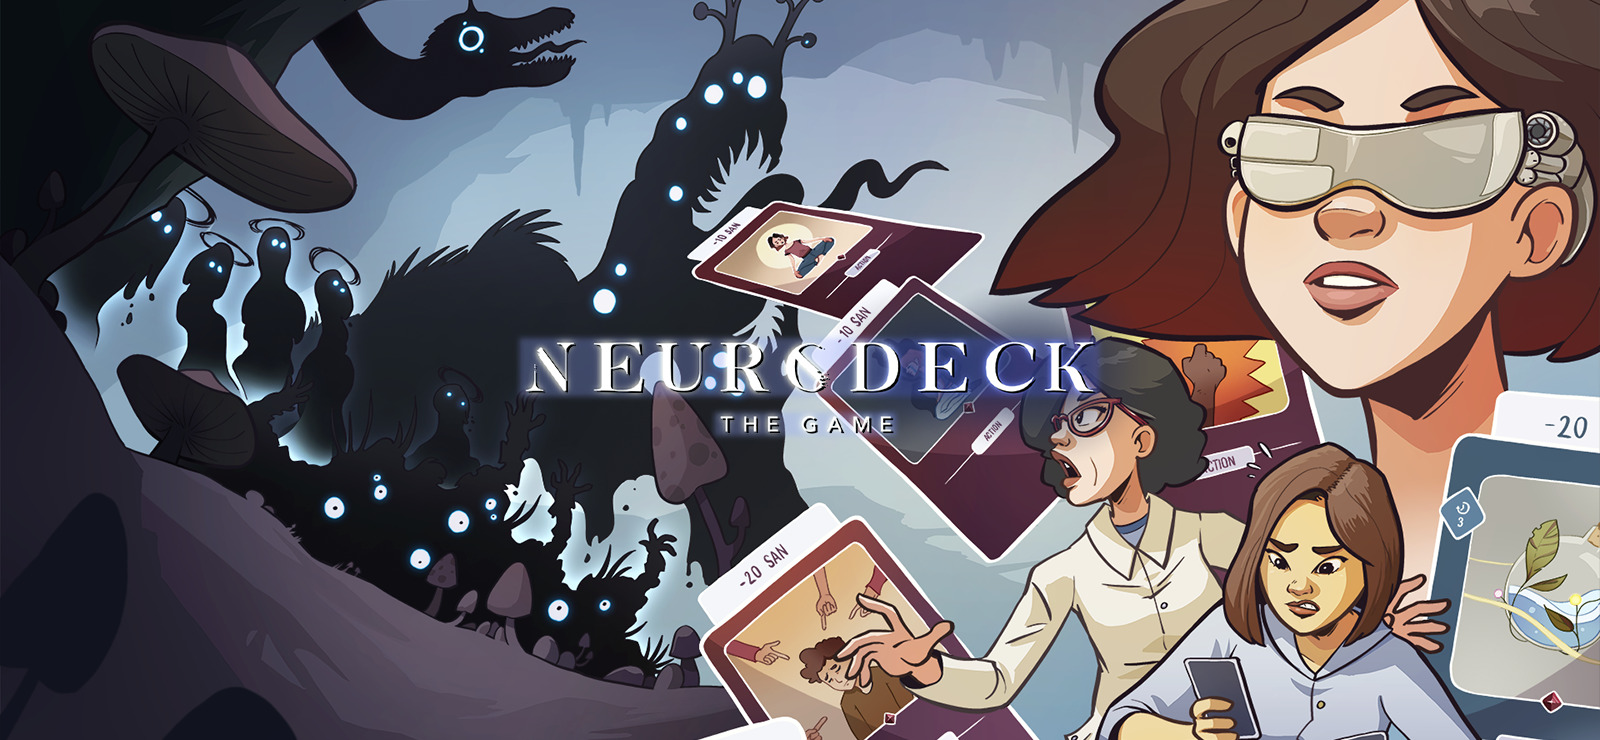   
 
Neurodeck : Psychological Deckbuilder Demo is available here



  



Features
 Deck